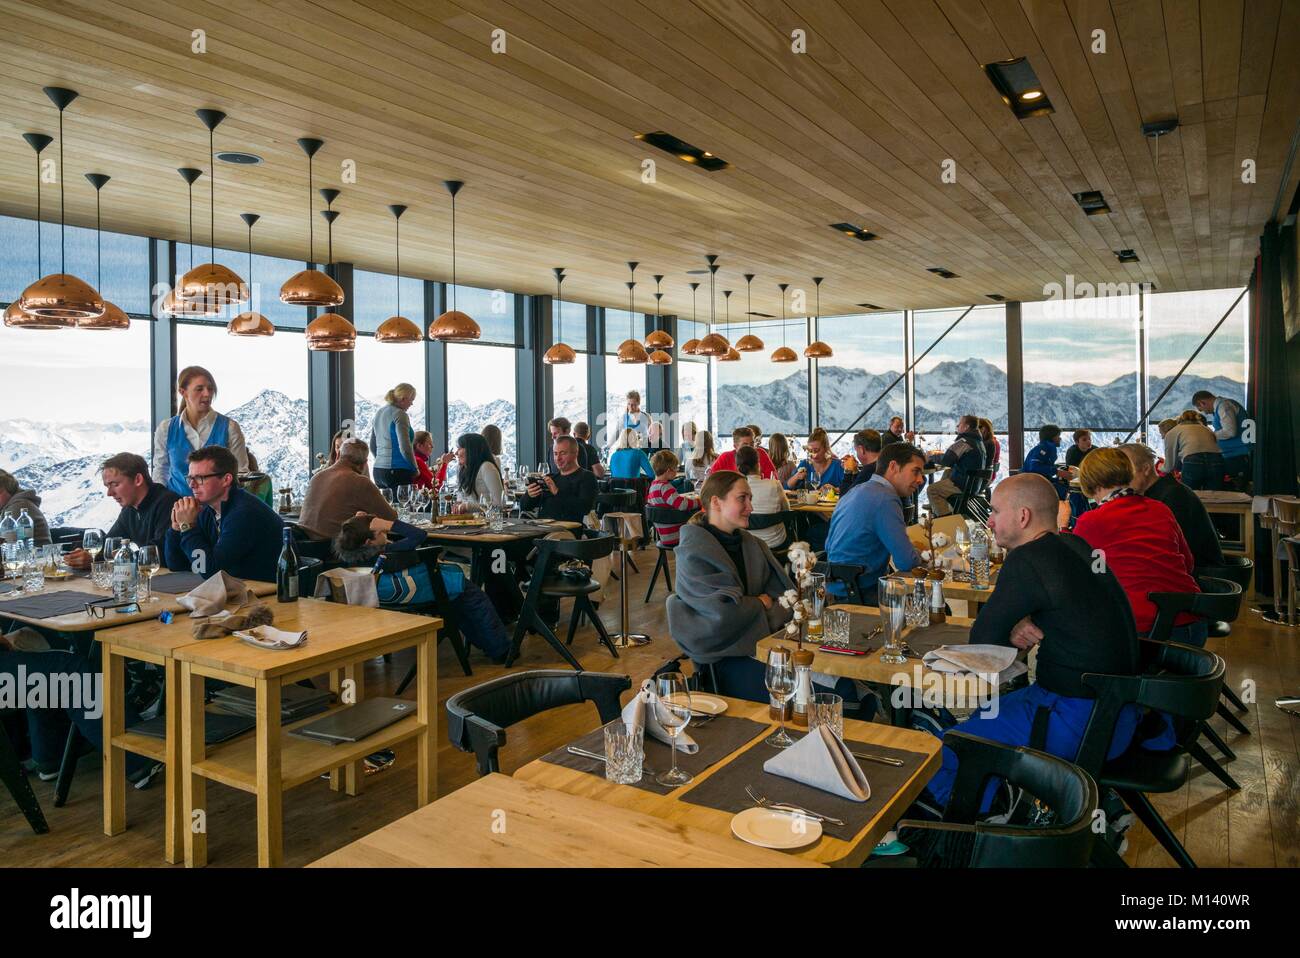 Austria, Tyrol, Otztal, Solden, Gaislachkogl ski mountain, Gaislachkogl Summit, elevation 3058 meters, Ice Q gourmet restaurant, interior, winter Stock Photo